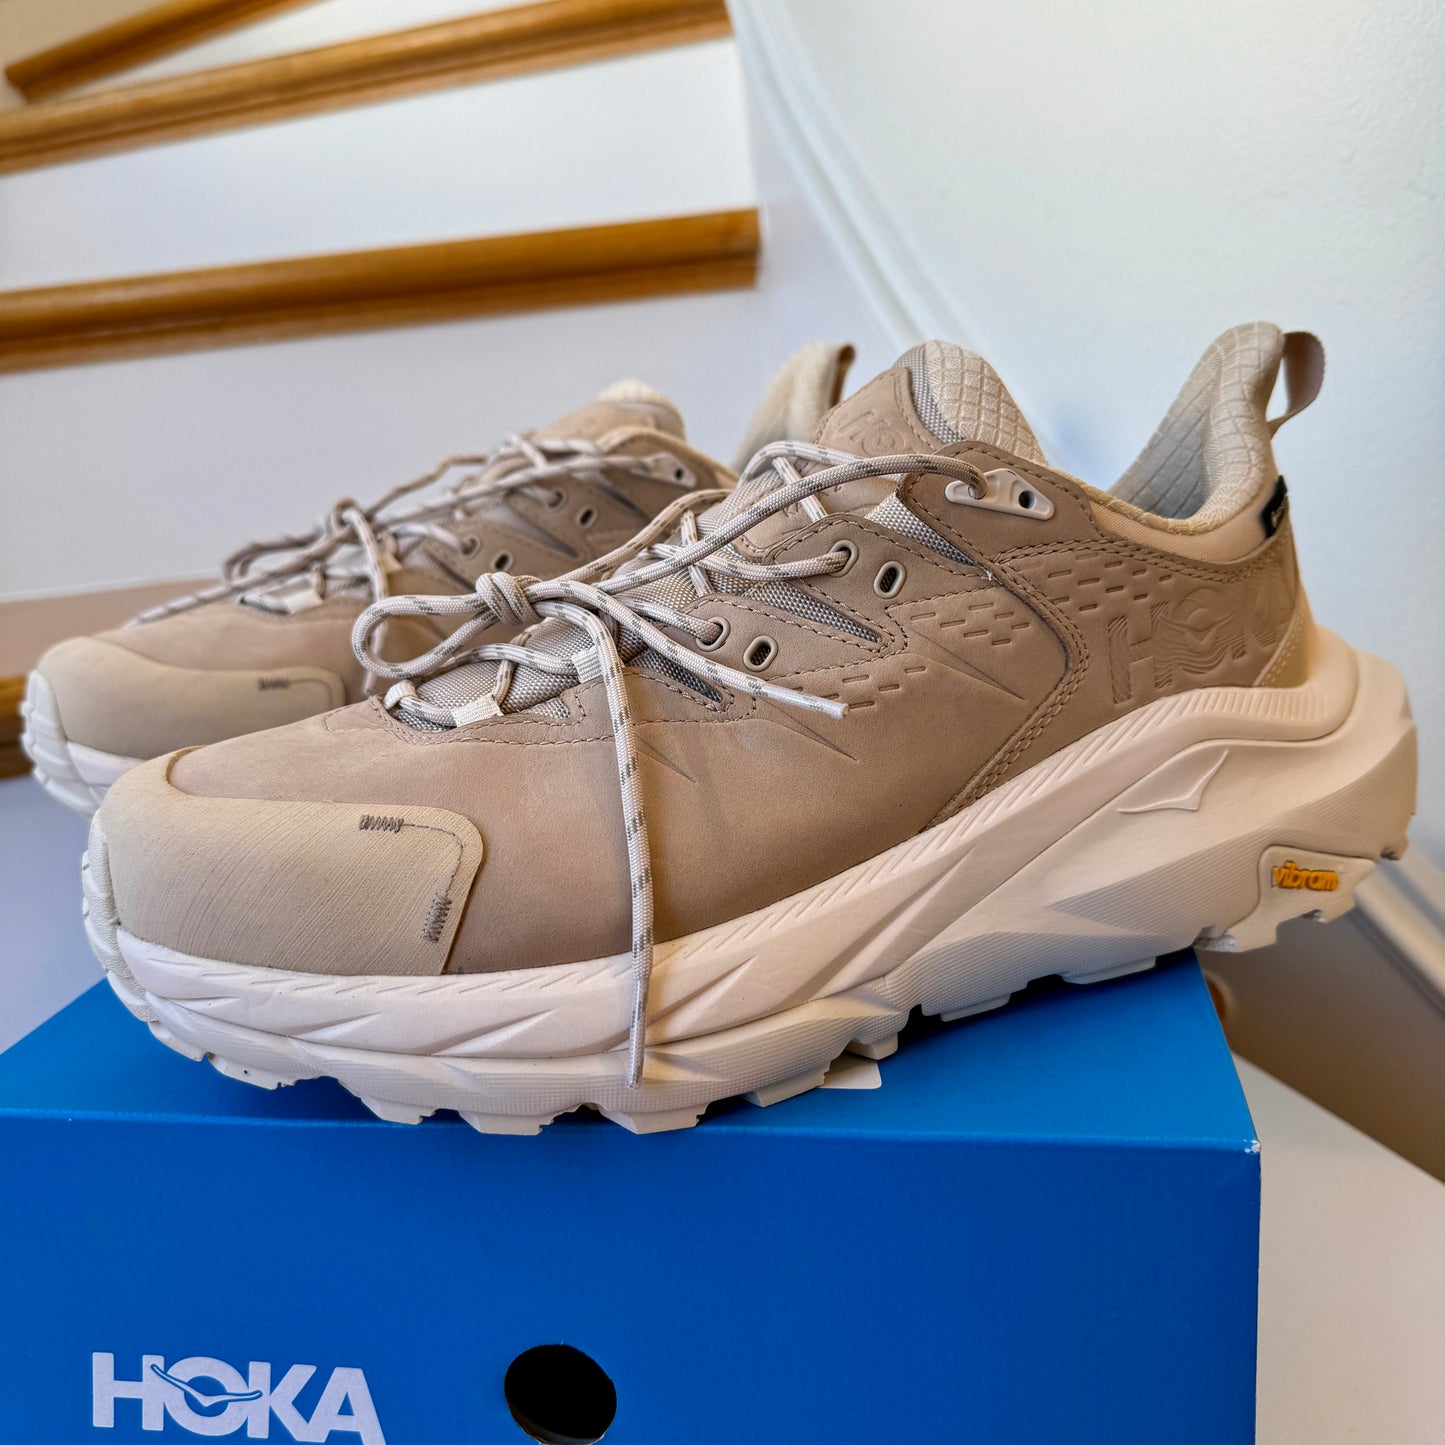 Hoka Kaha 2 GTX Low Hiking Boots Waterproof Gore Tex Shifting Sand Eggnog